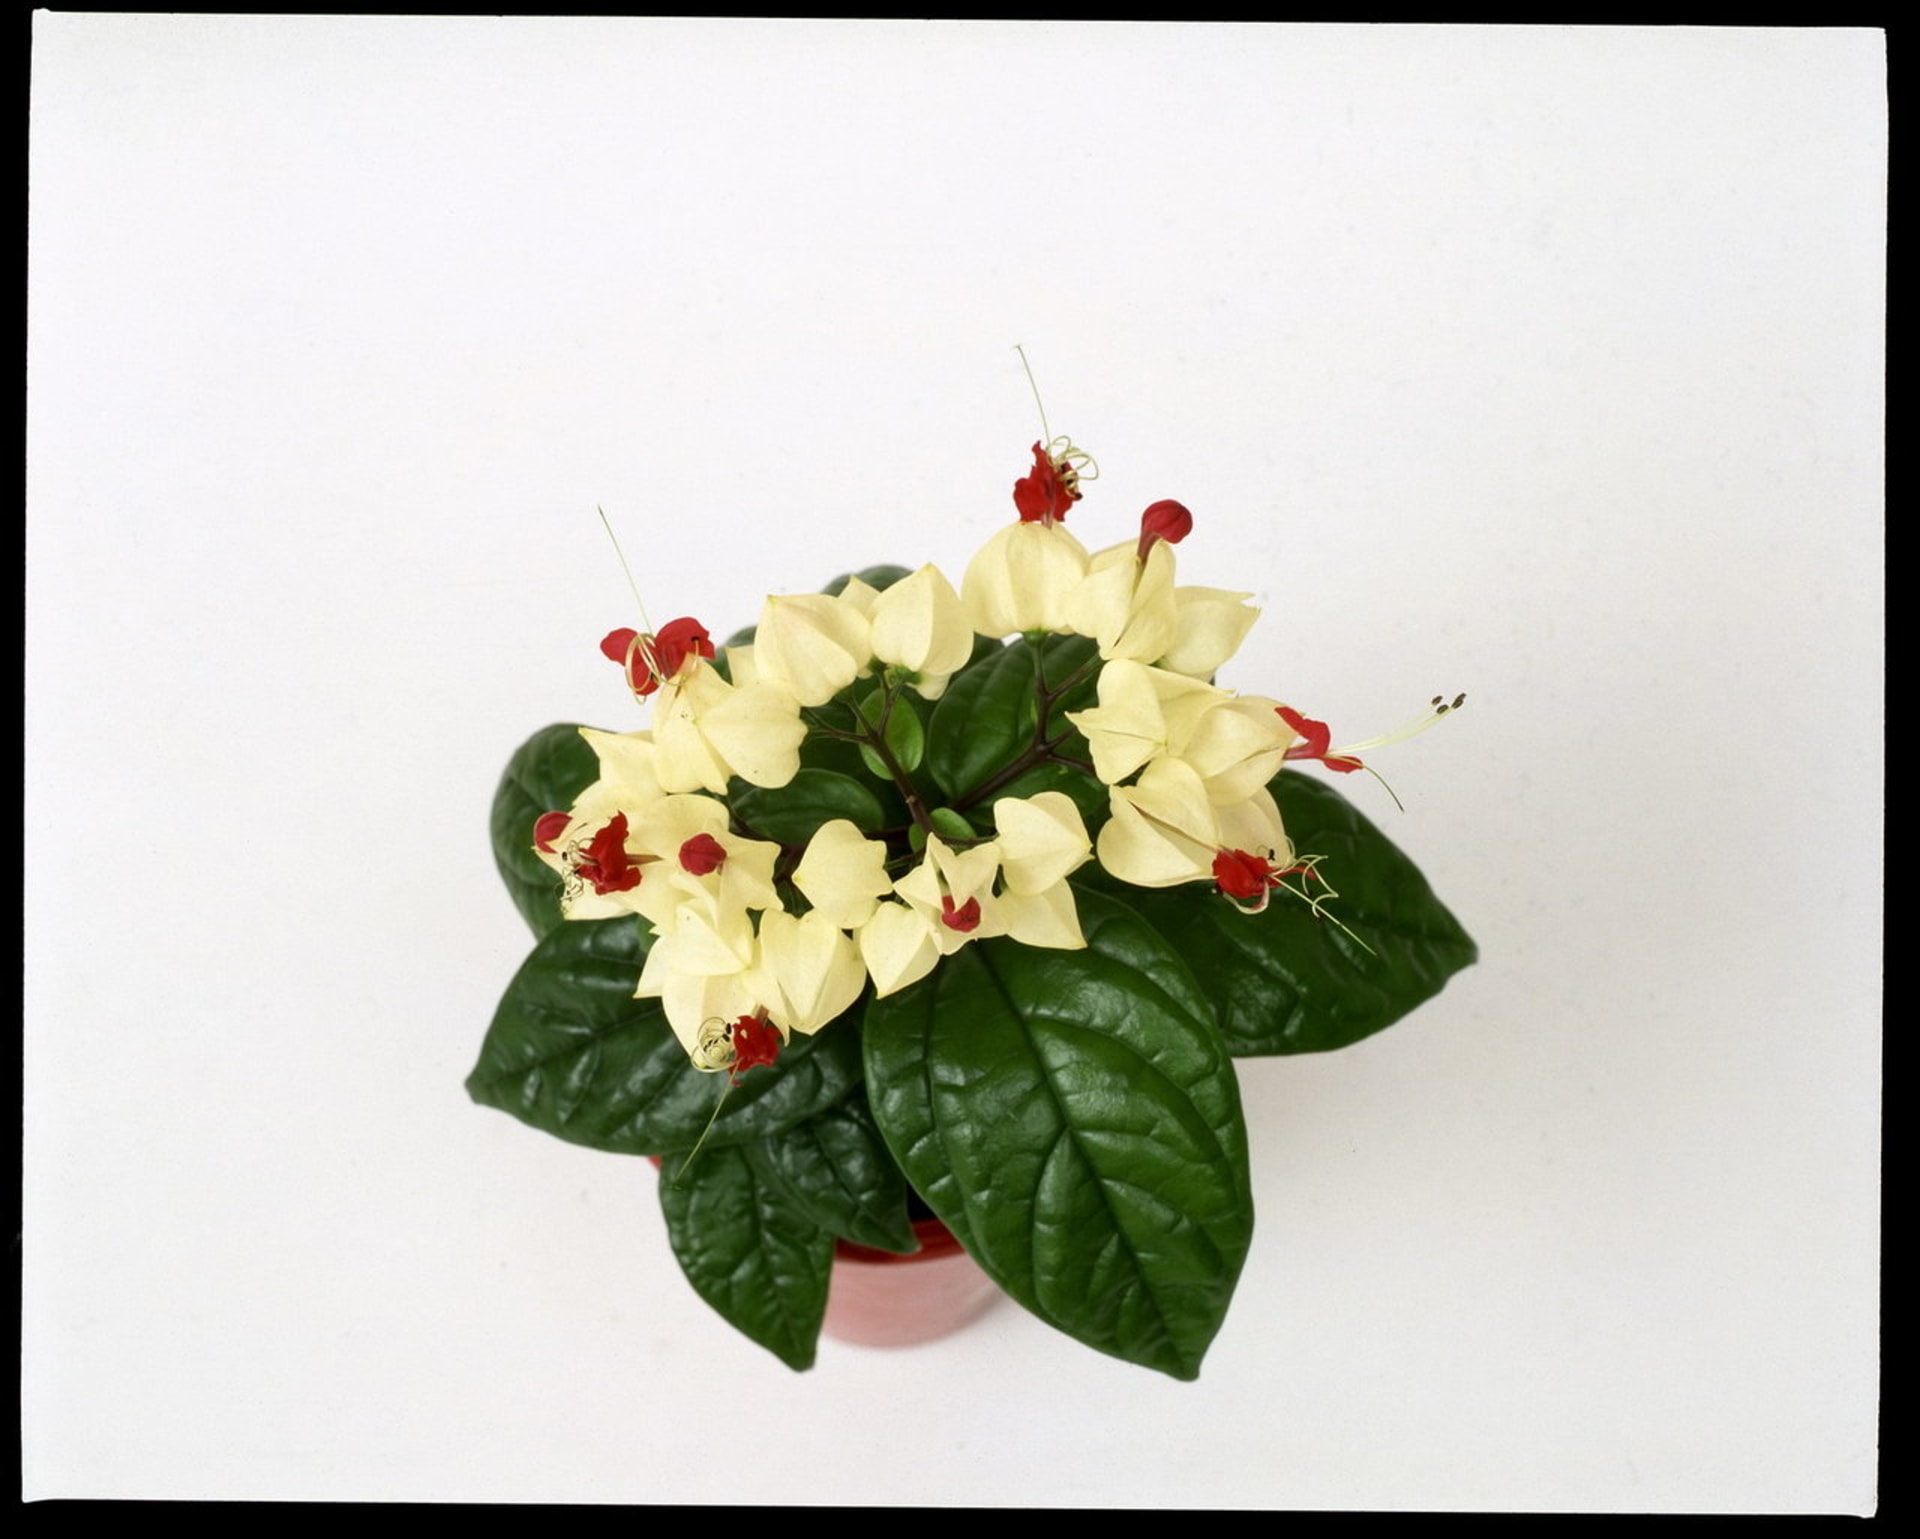 Blahokeř/Clerodendrum thomsoniae - v květináči